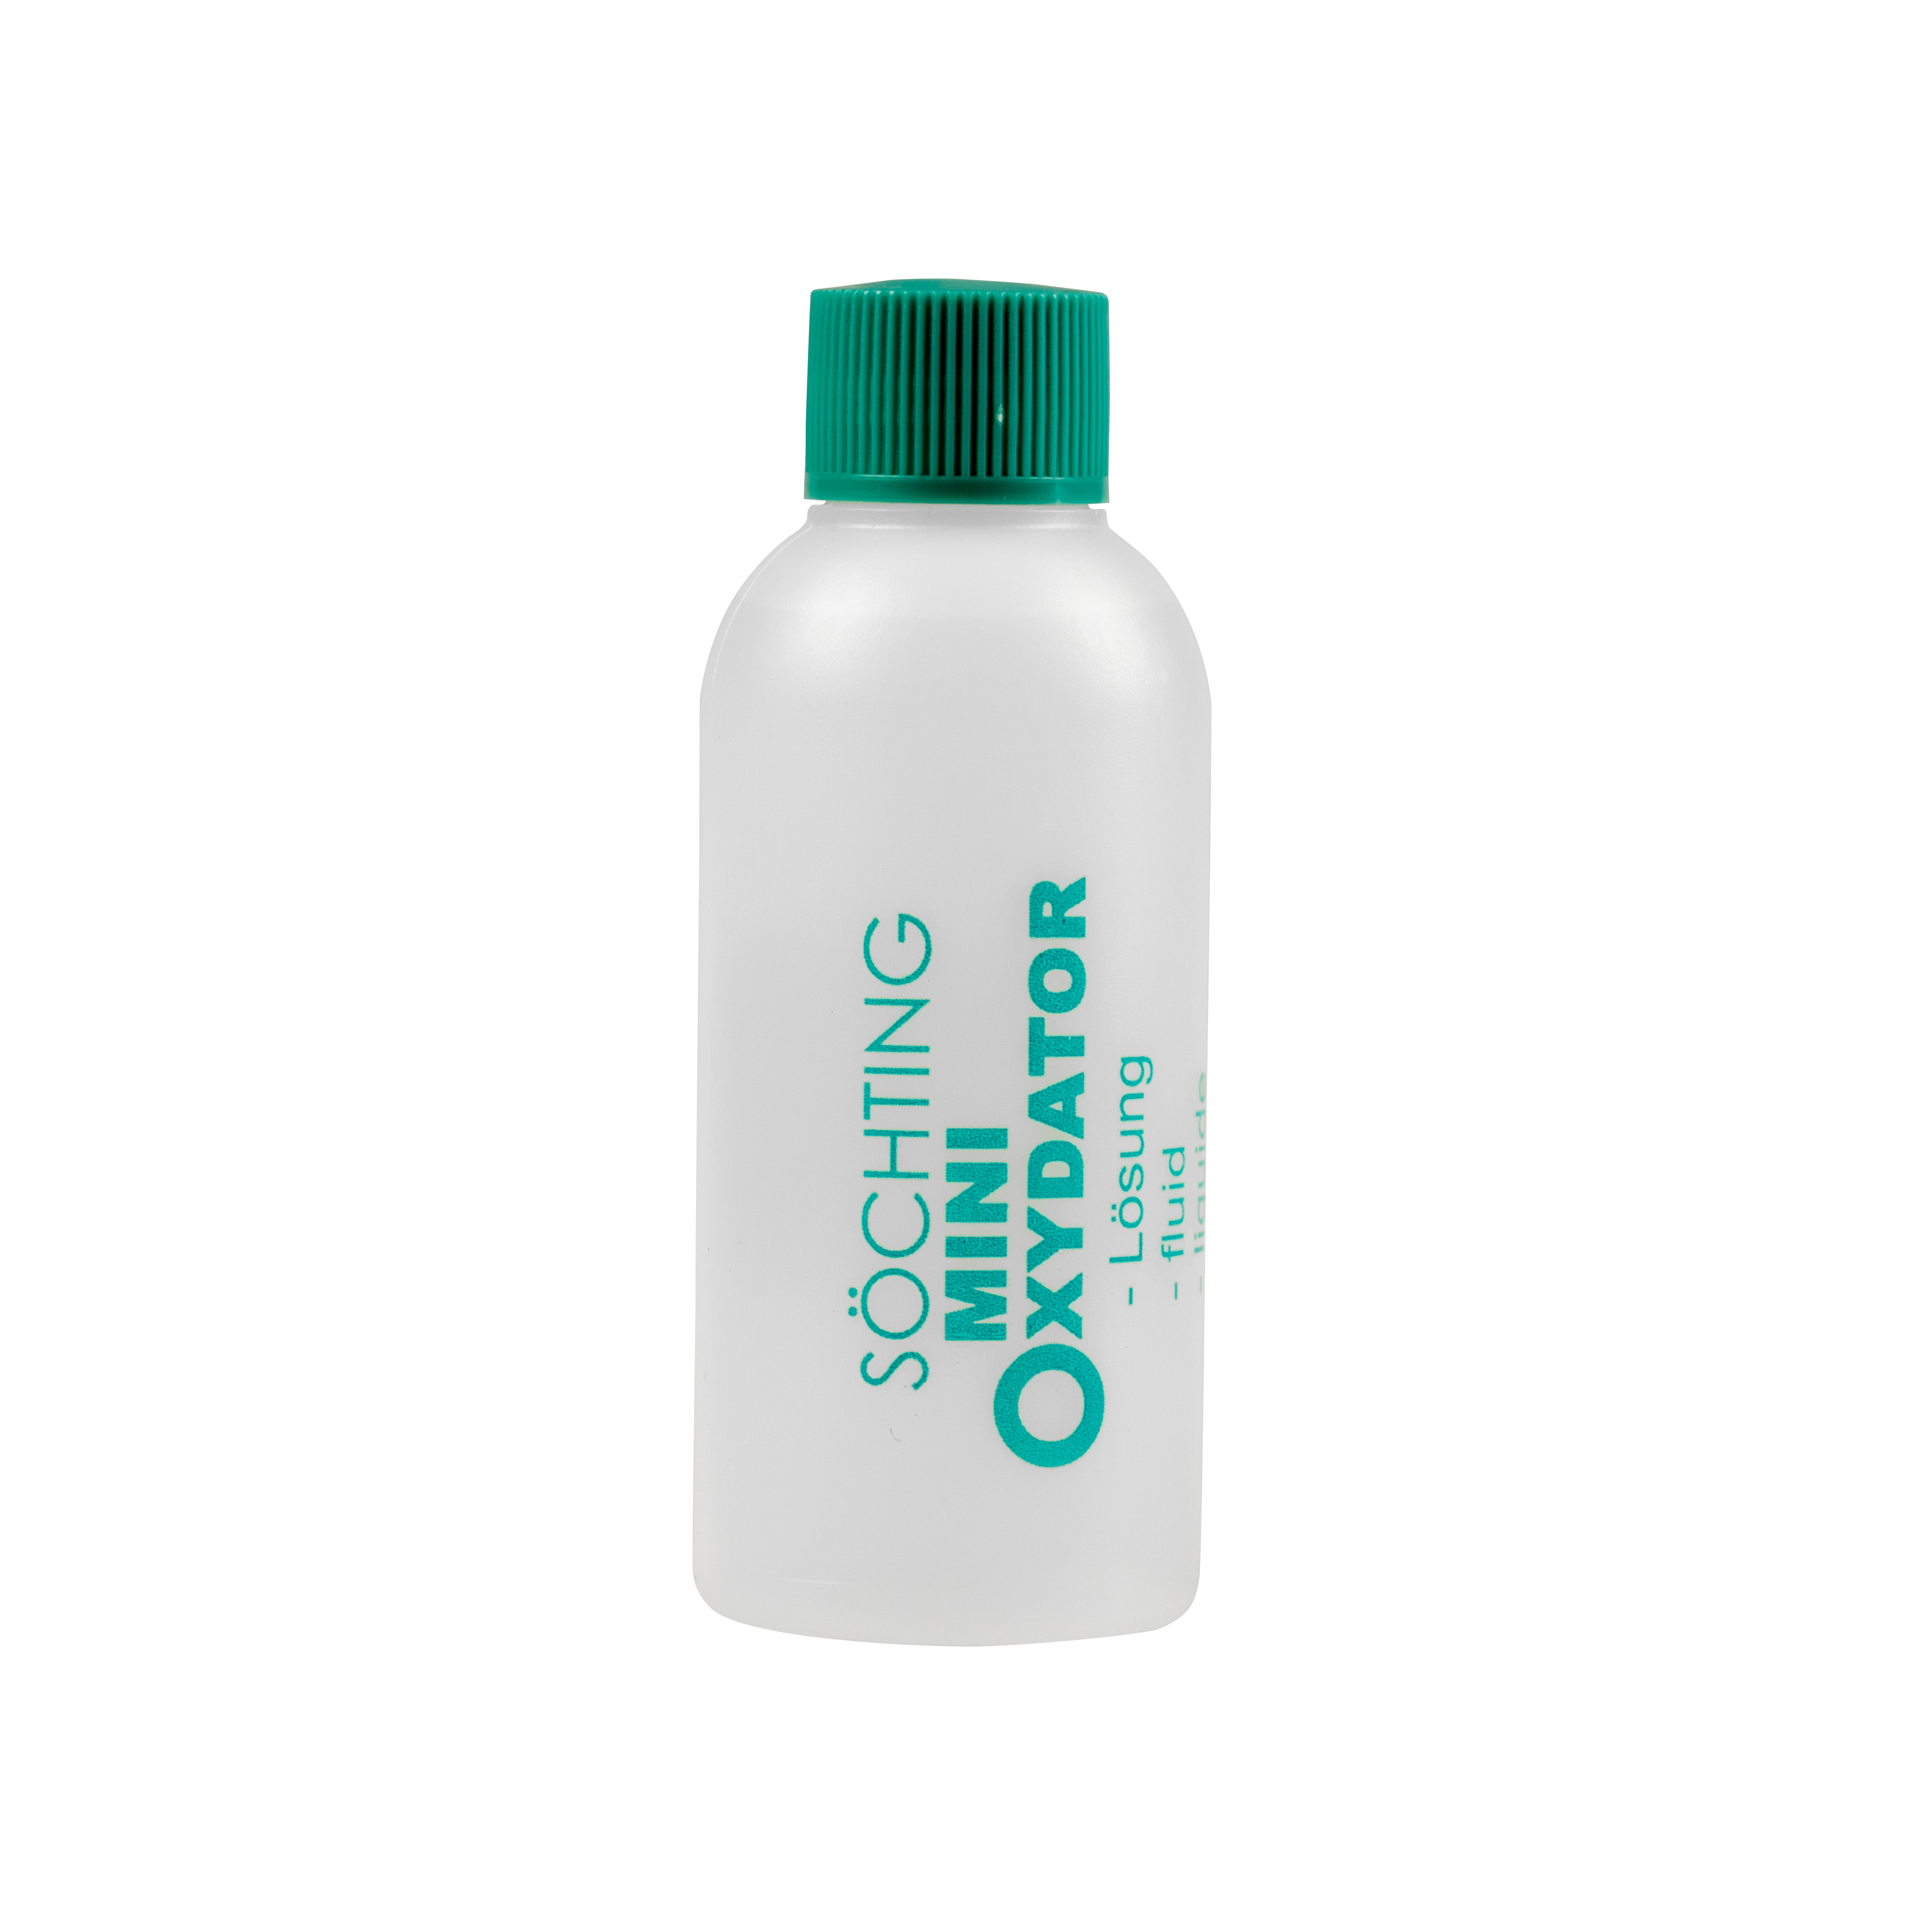 Oxydator liquid 4,9% - Product shot